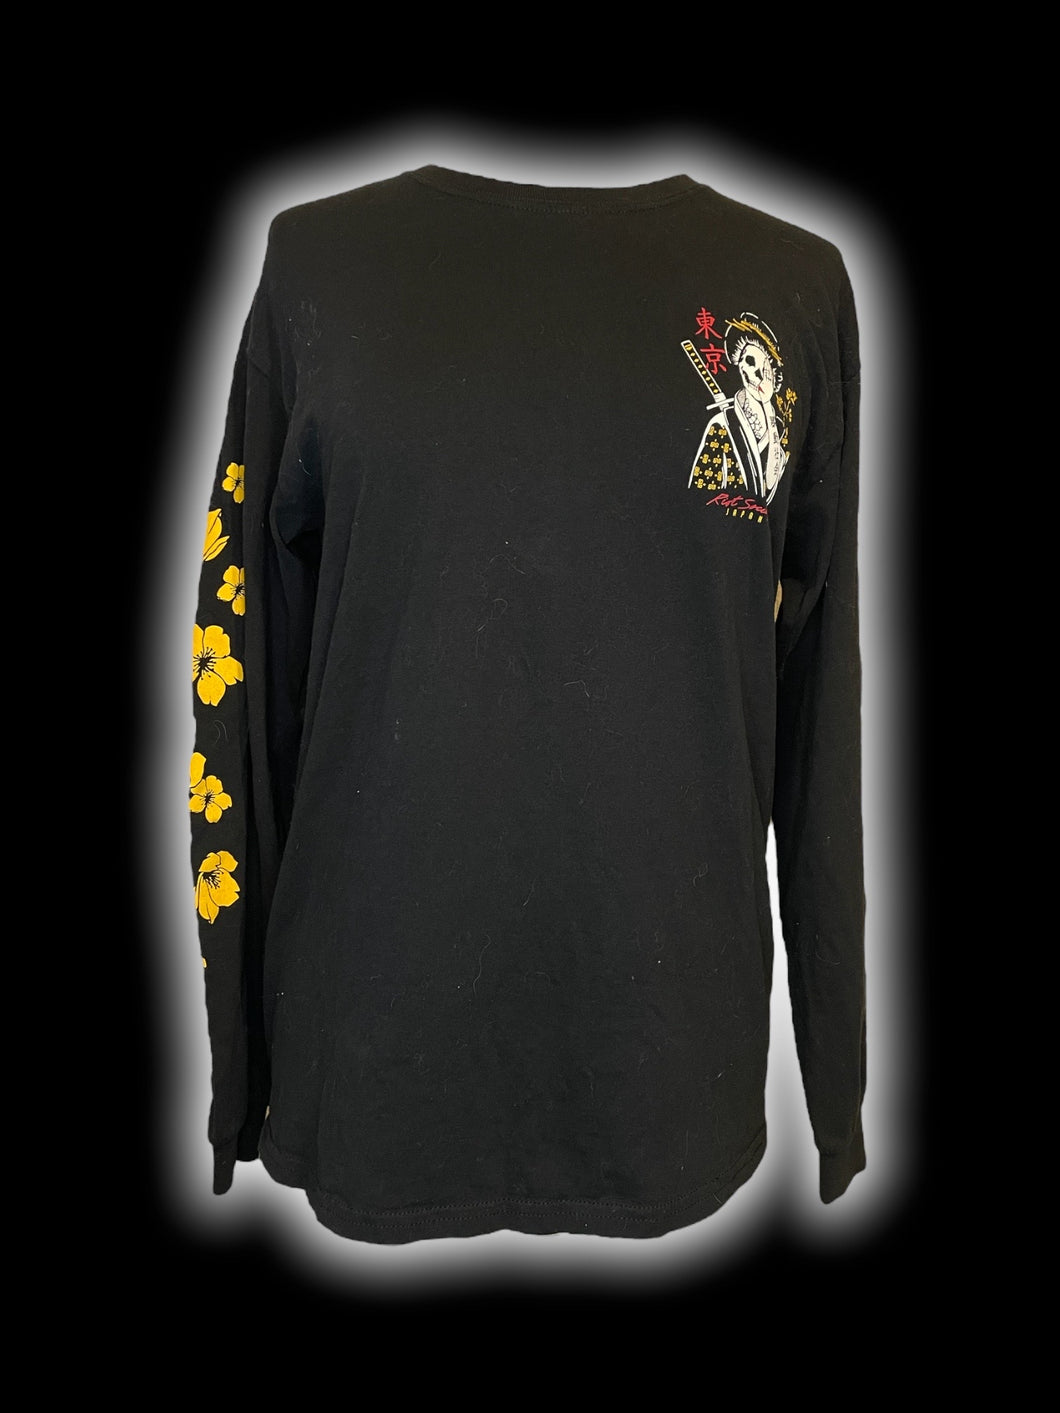 L Black “Riot Society” long sleeve crew neck cotton top w/ multicolor graphic